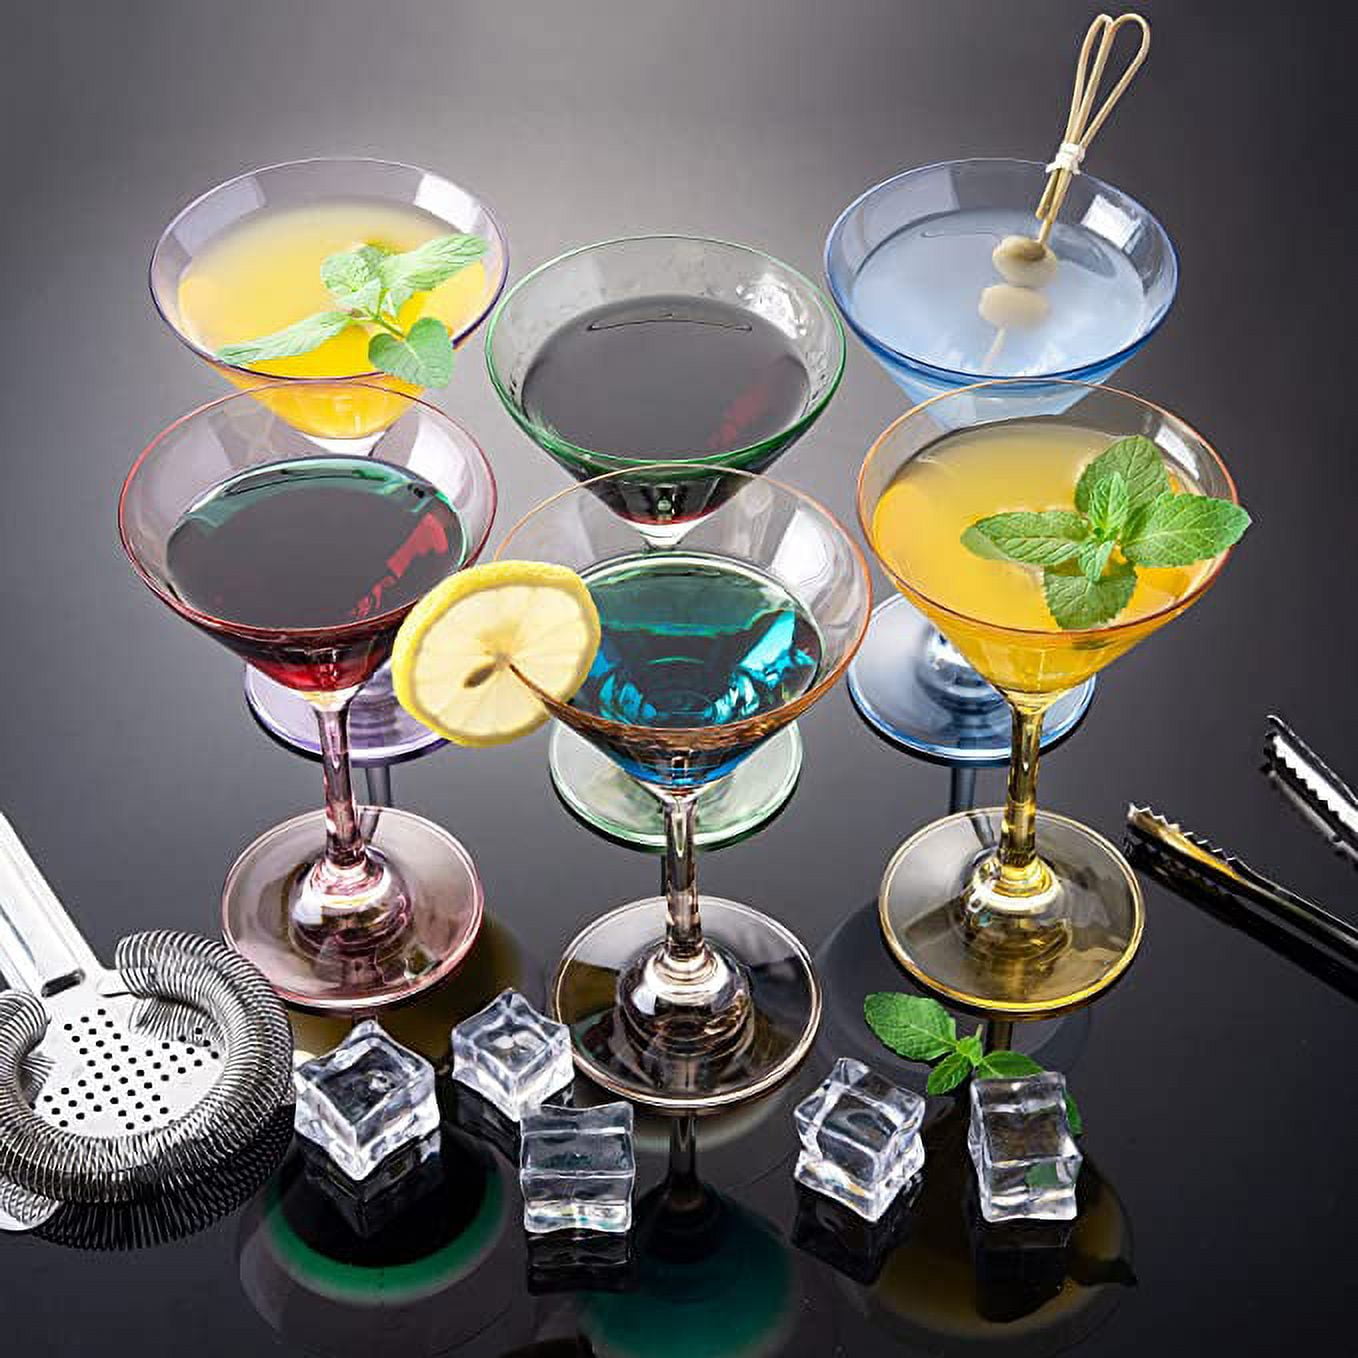 VENVENWEAVS Martini Glasses Set of 4, Hand-blown Crystal Cocktail Glasses  for Espresso Martini,Cosmo…See more VENVENWEAVS Martini Glasses Set of 4